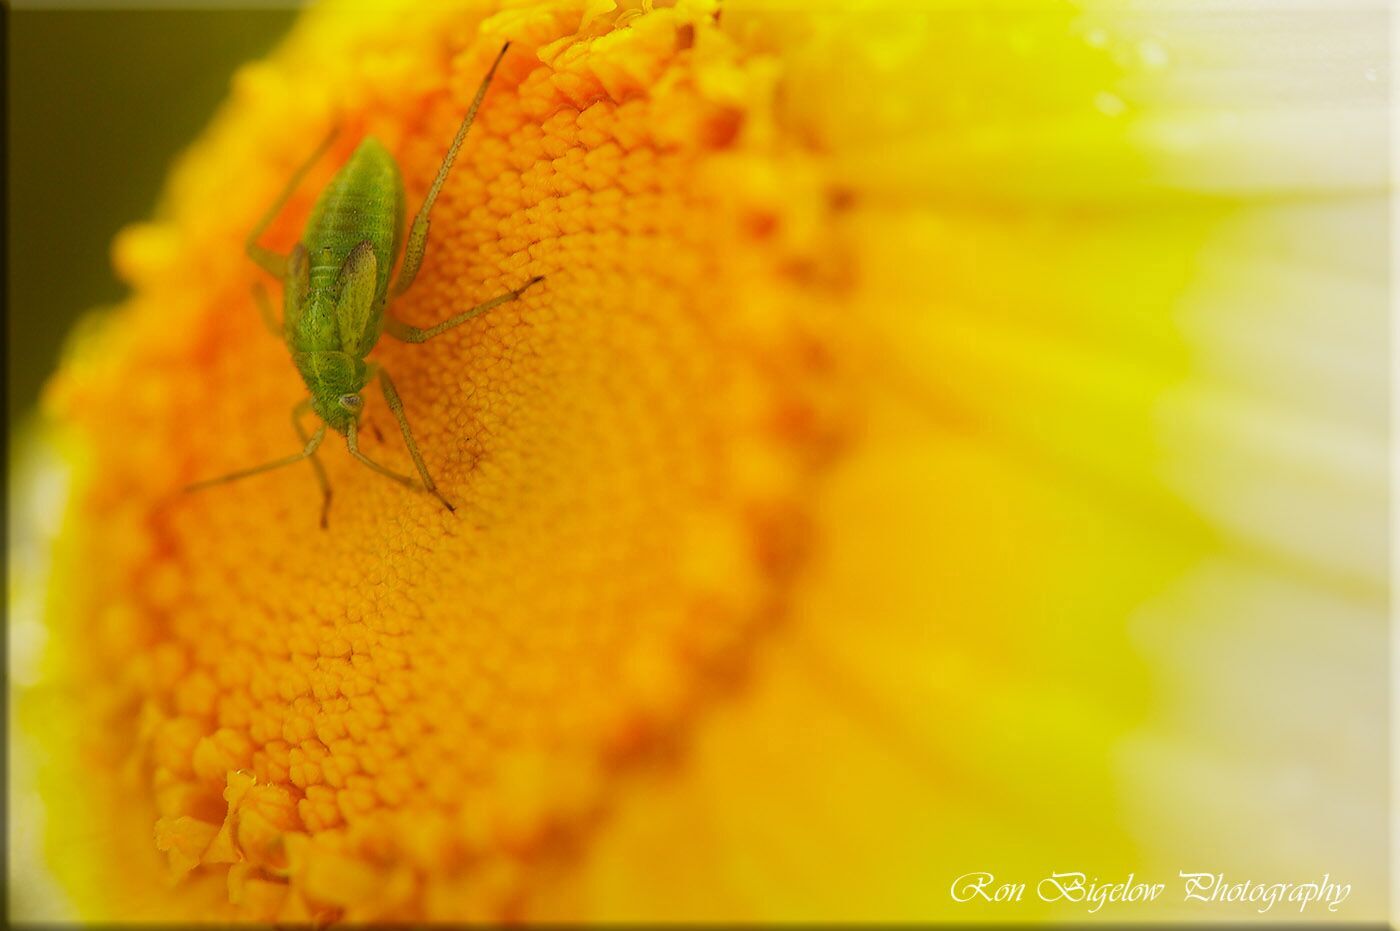 Ron Bigelow Photography - Sunflower Bug